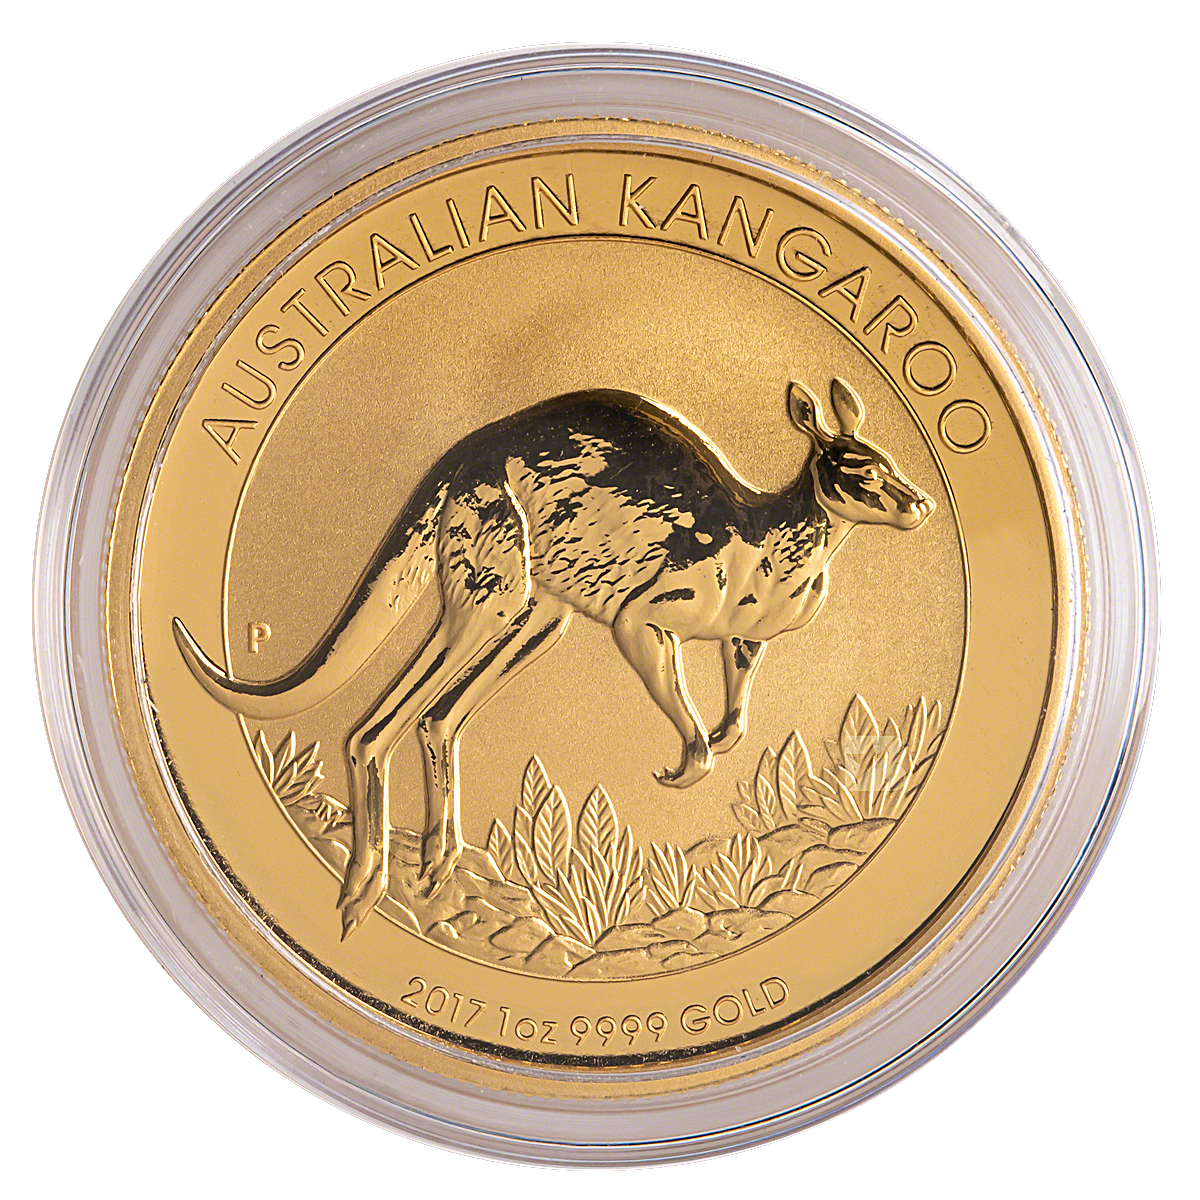 Australian Kangaroo one Tonne Gold Coin.